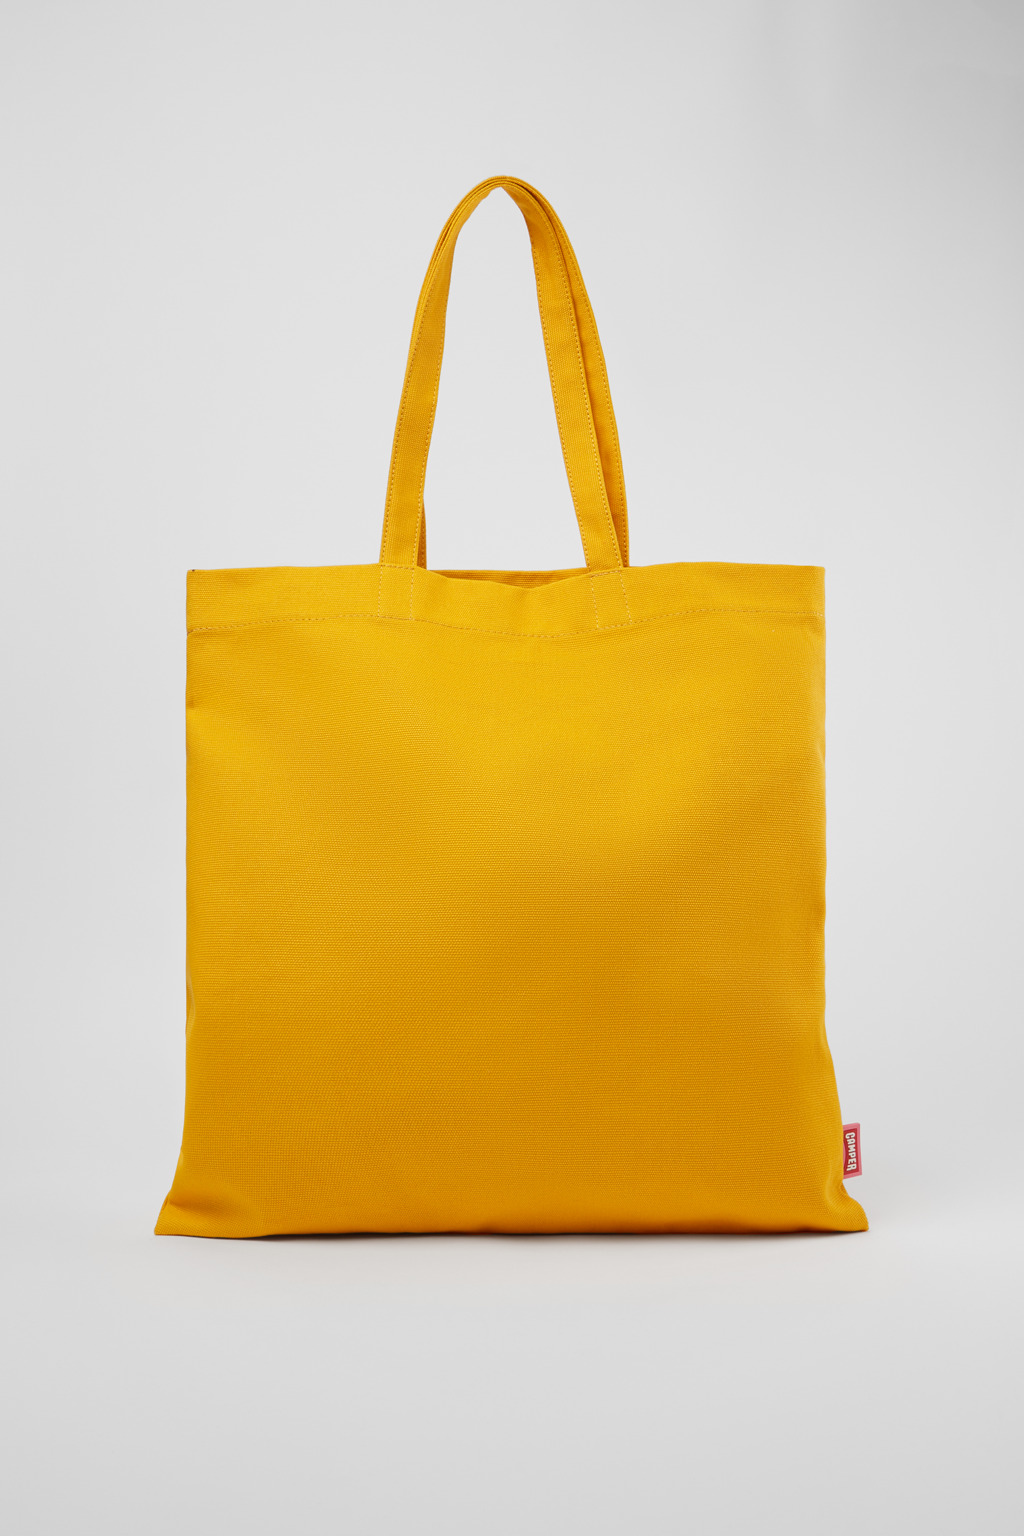 ConMigo Orange recycled cotton tote bag